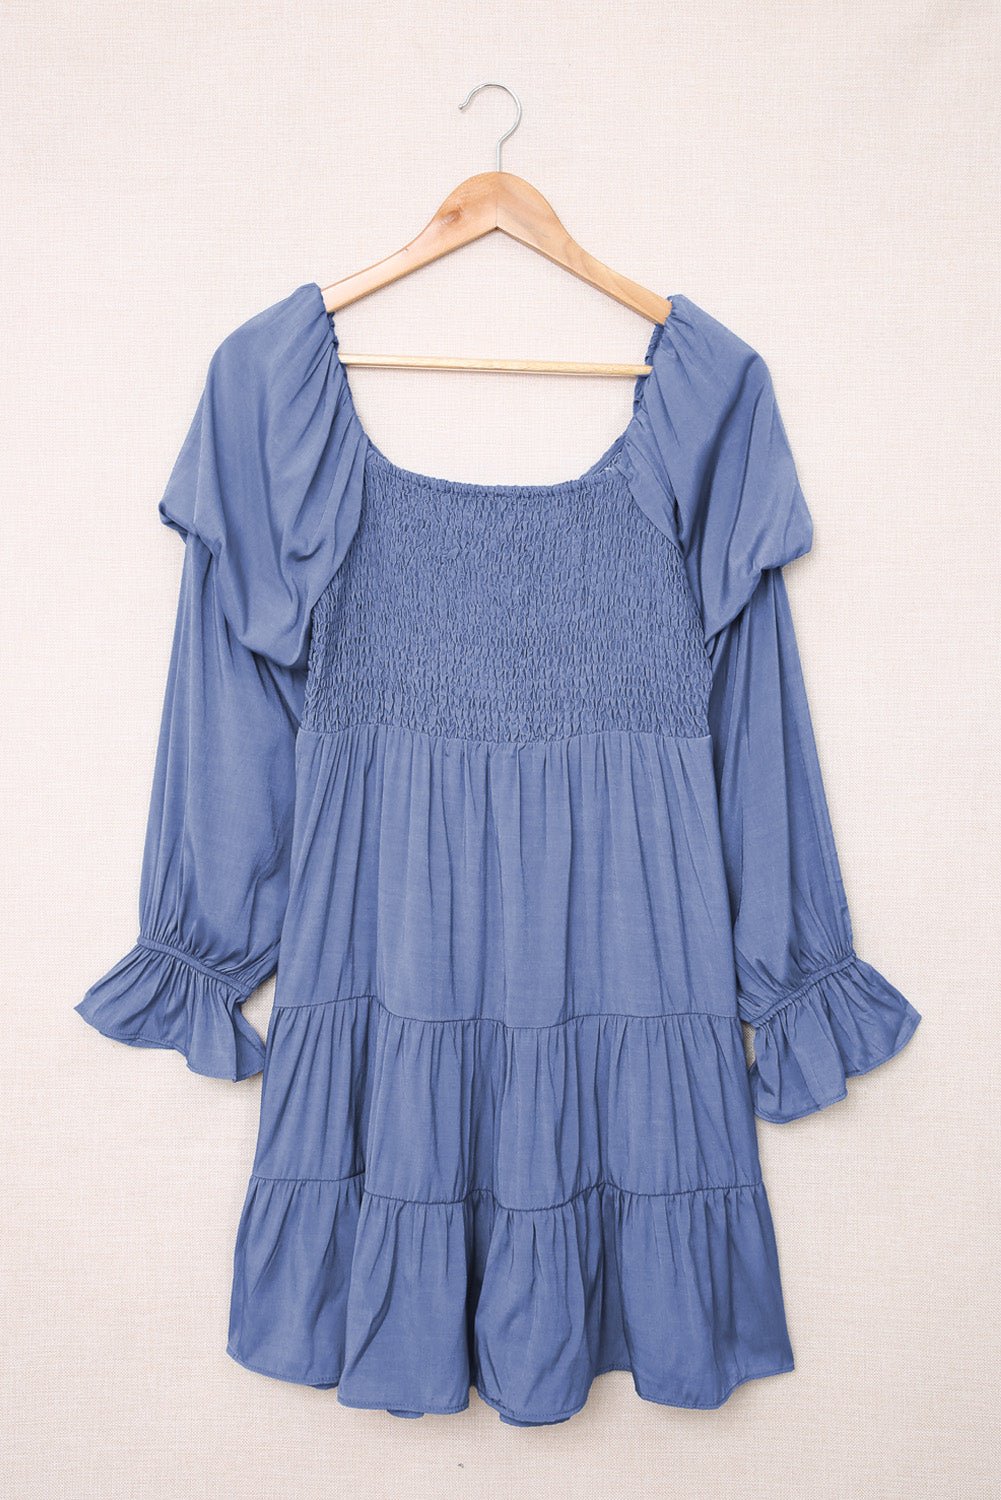 Smocked Off-Shoulder Tiered Mini Dress - Fashion Girl Online Store